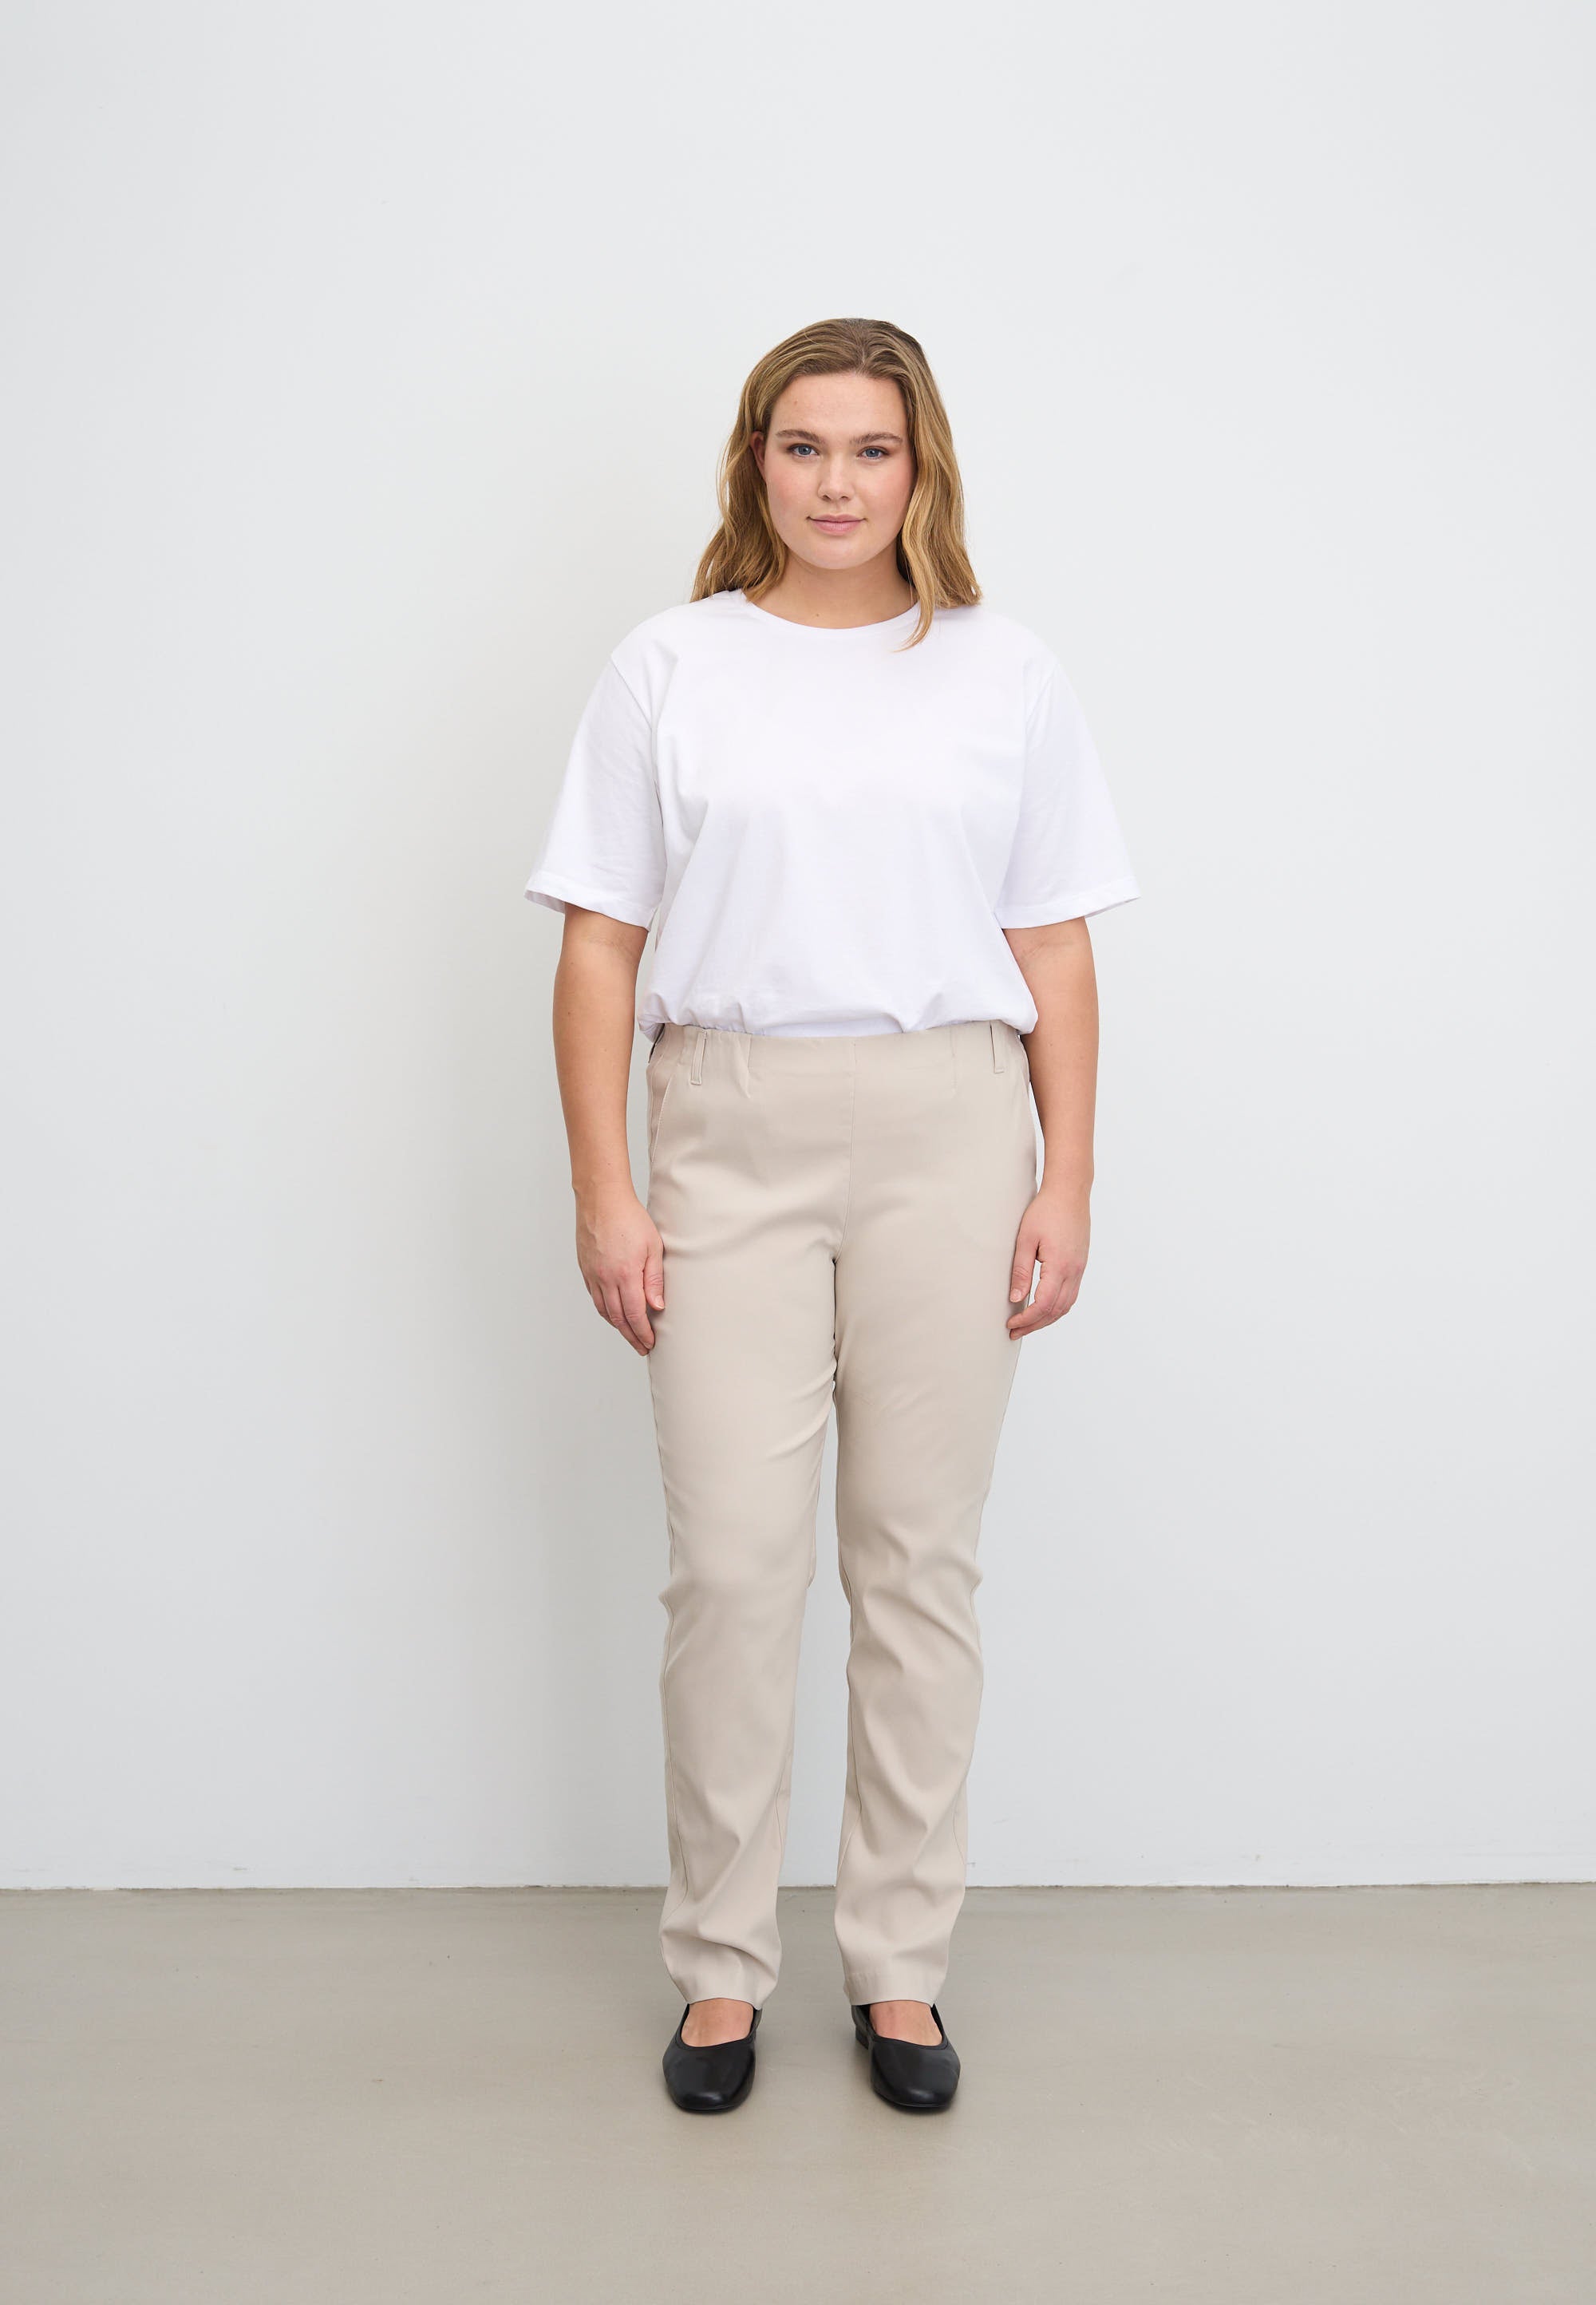 LAURIE  Taylor Regular - Medium Length Trousers REGULAR Grau sand